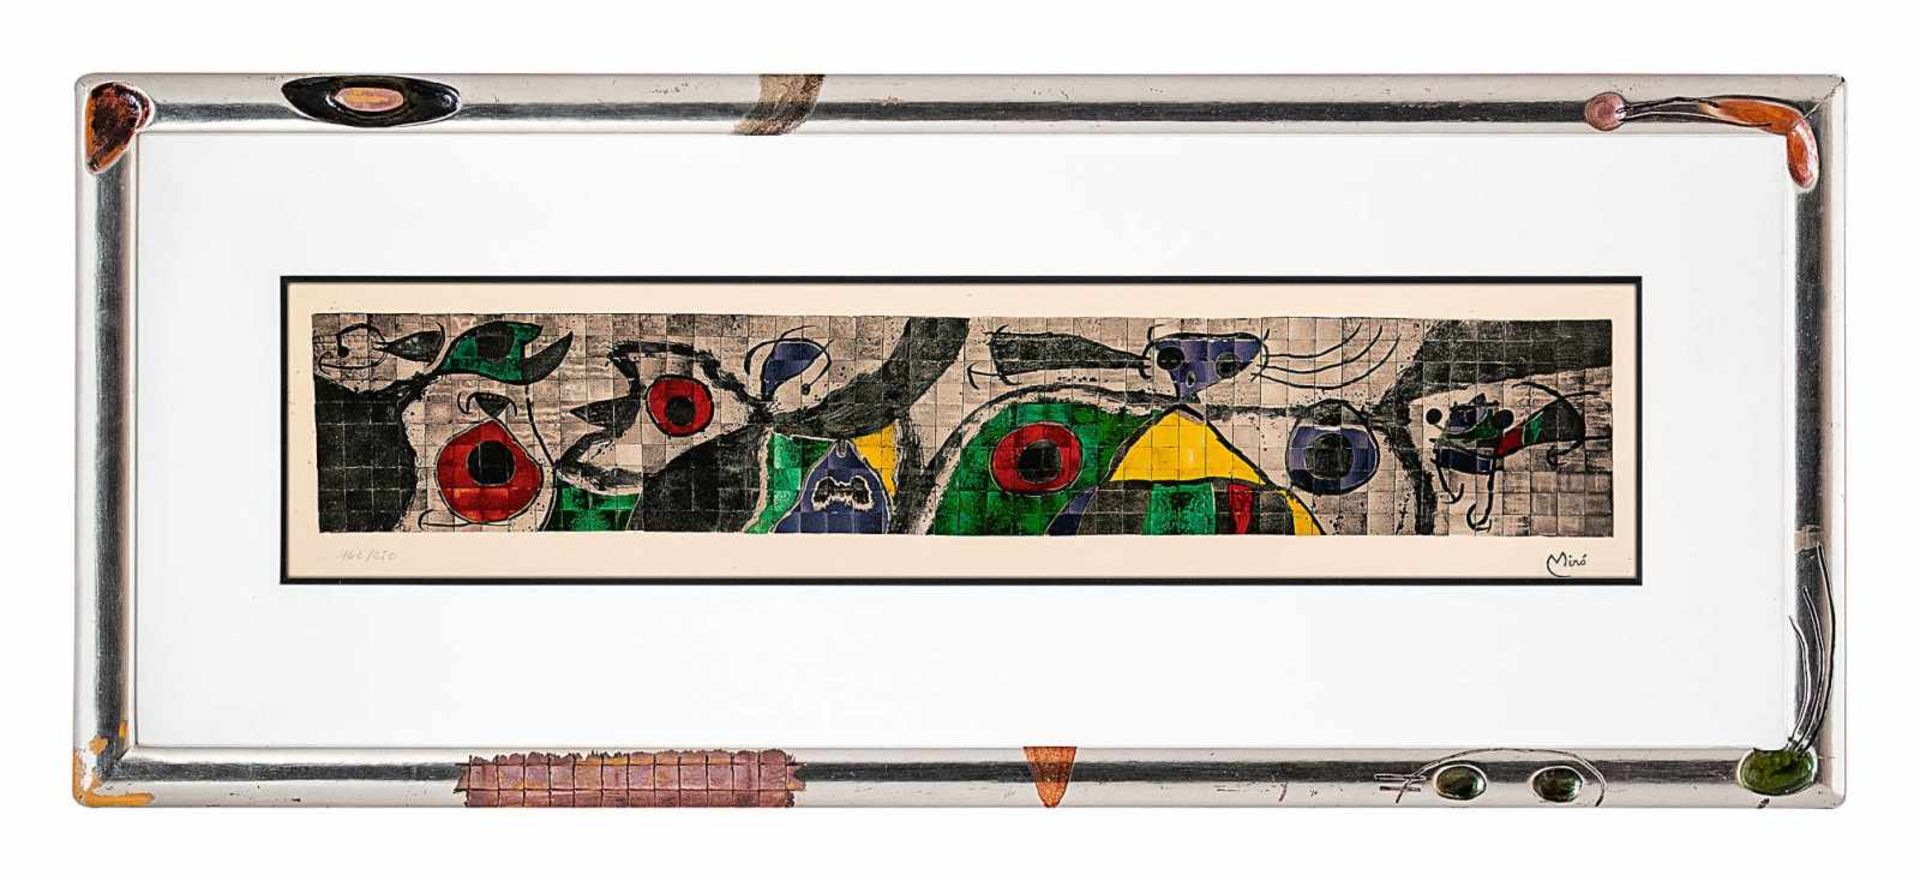 Miró, Joan1893 Barcelona - 1983 Palma de Mallorca.«Terres de grand feu». 1968. Farblithographie - Bild 2 aus 2